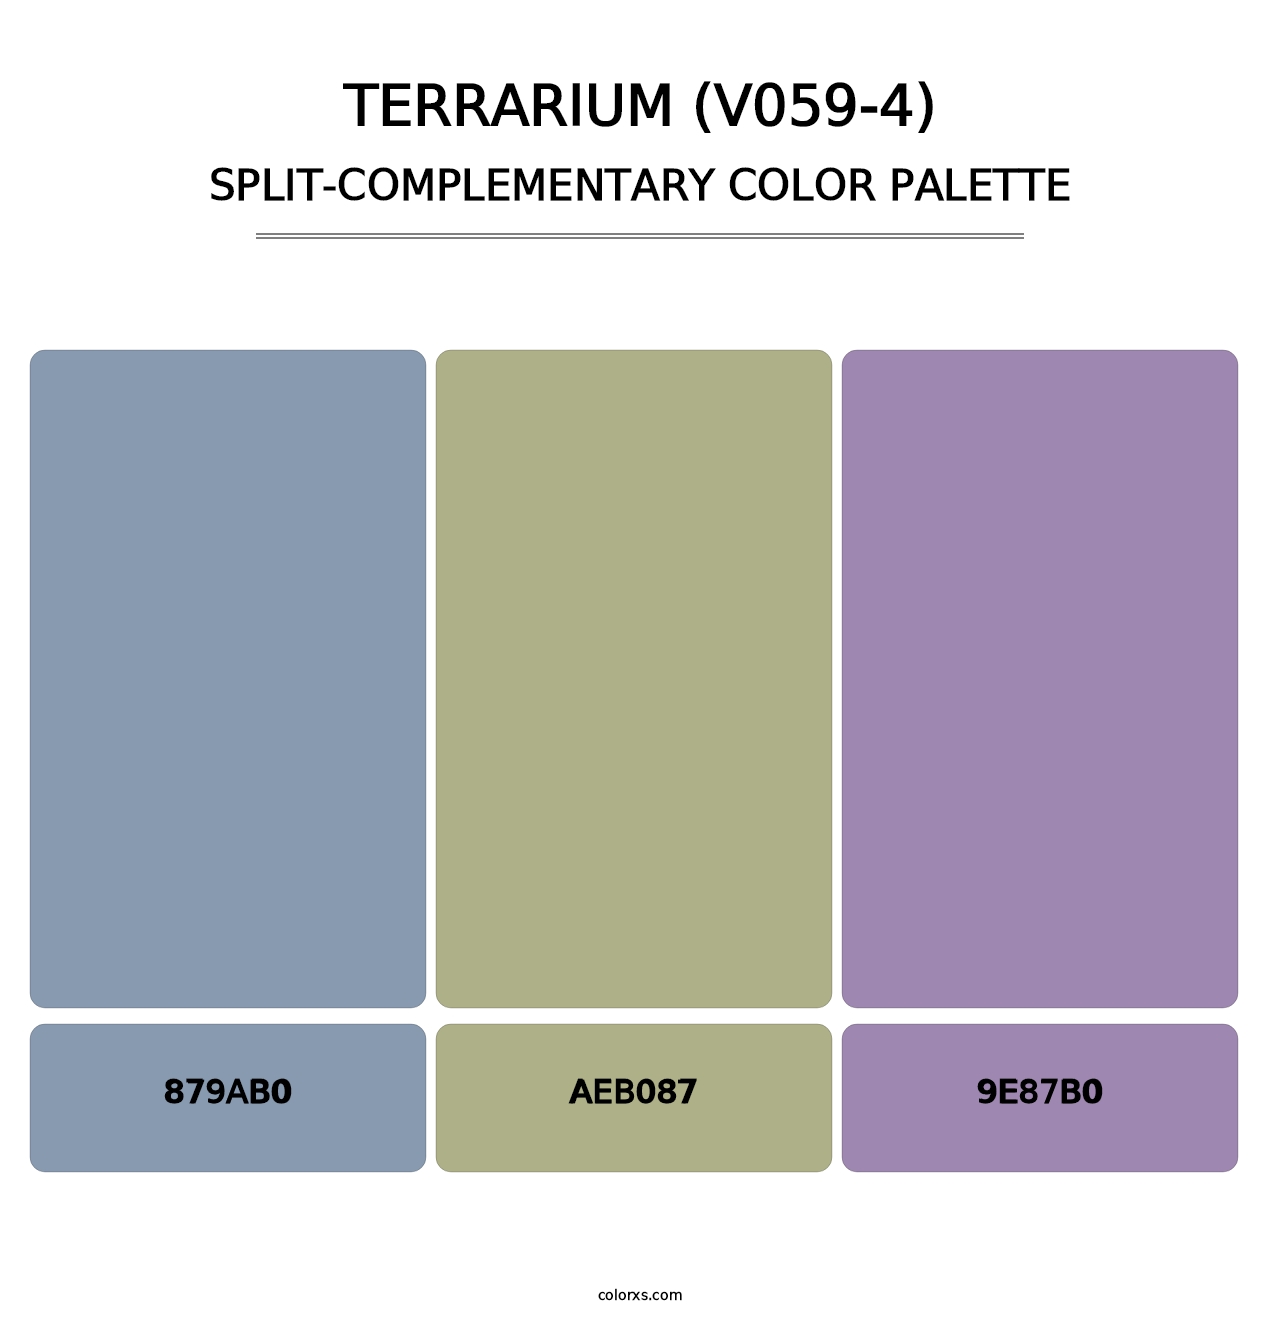 Terrarium (V059-4) - Split-Complementary Color Palette